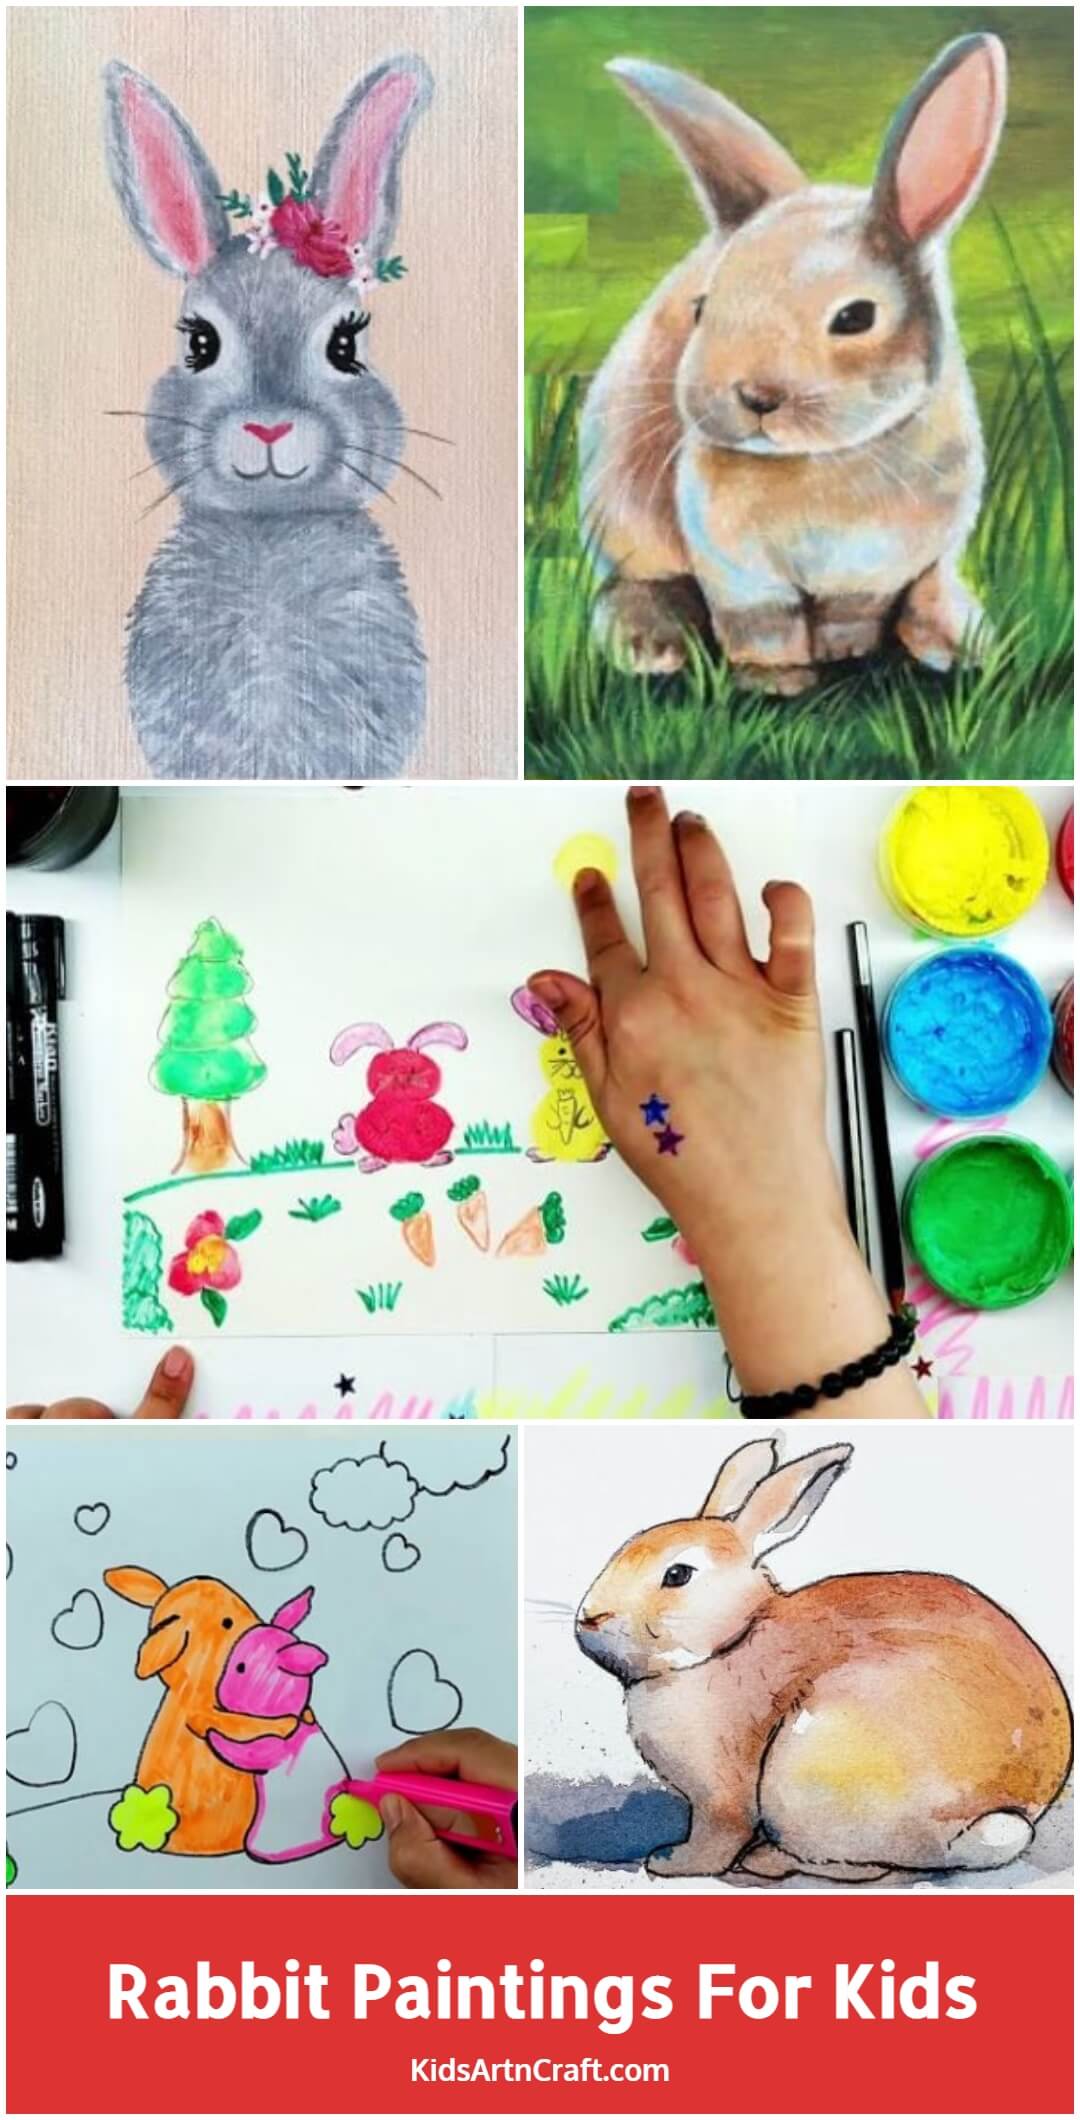 Rabbit Paintings For Kids